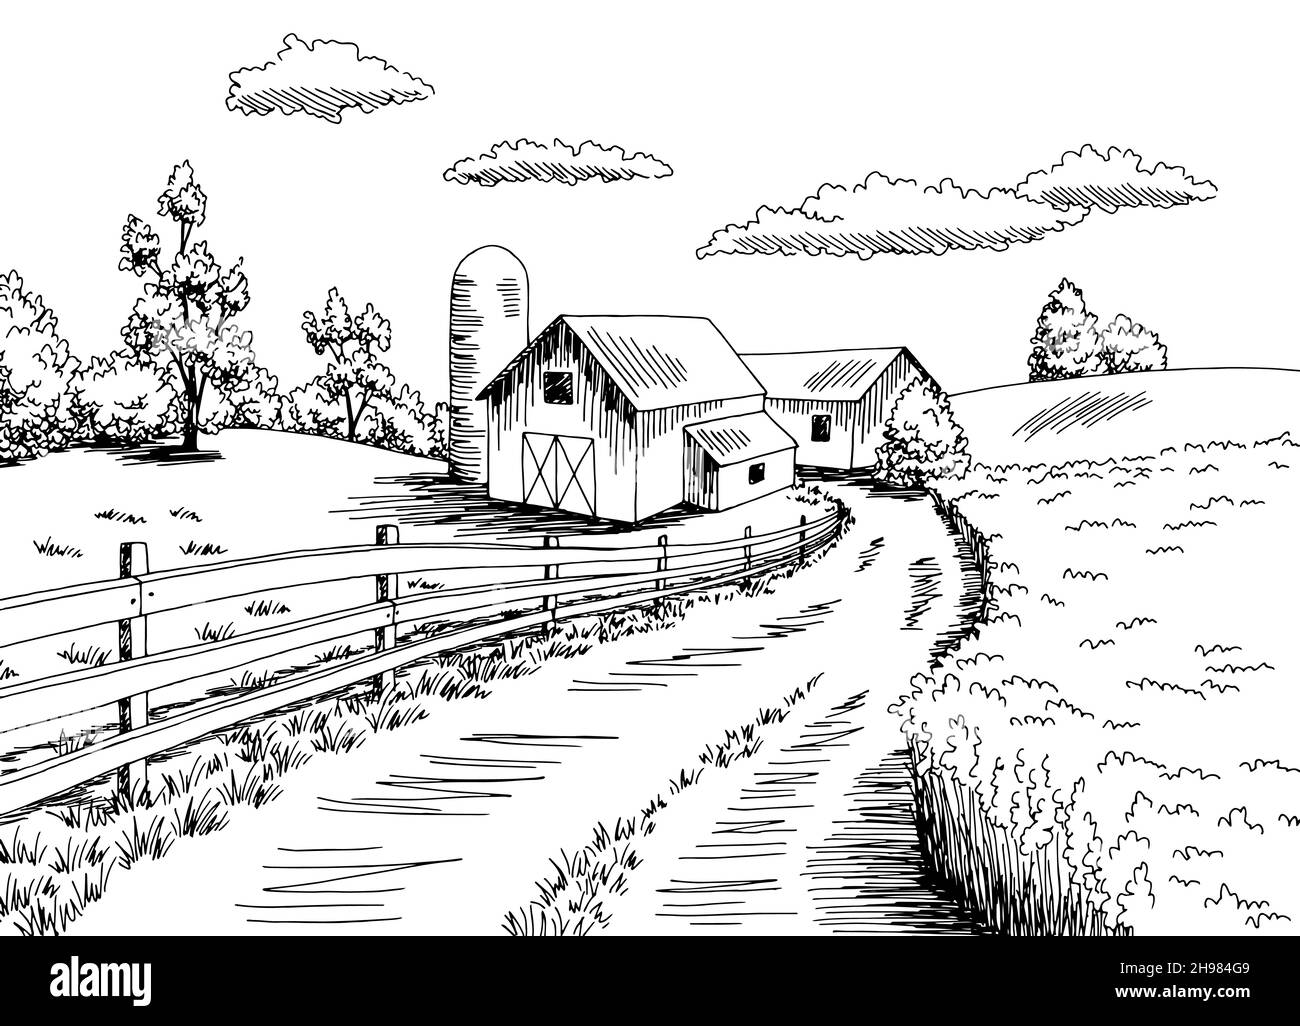 Bauernhof Feld Grafik schwarz weiß Landschaft Skizze Illustration Vektor Stock Vektor